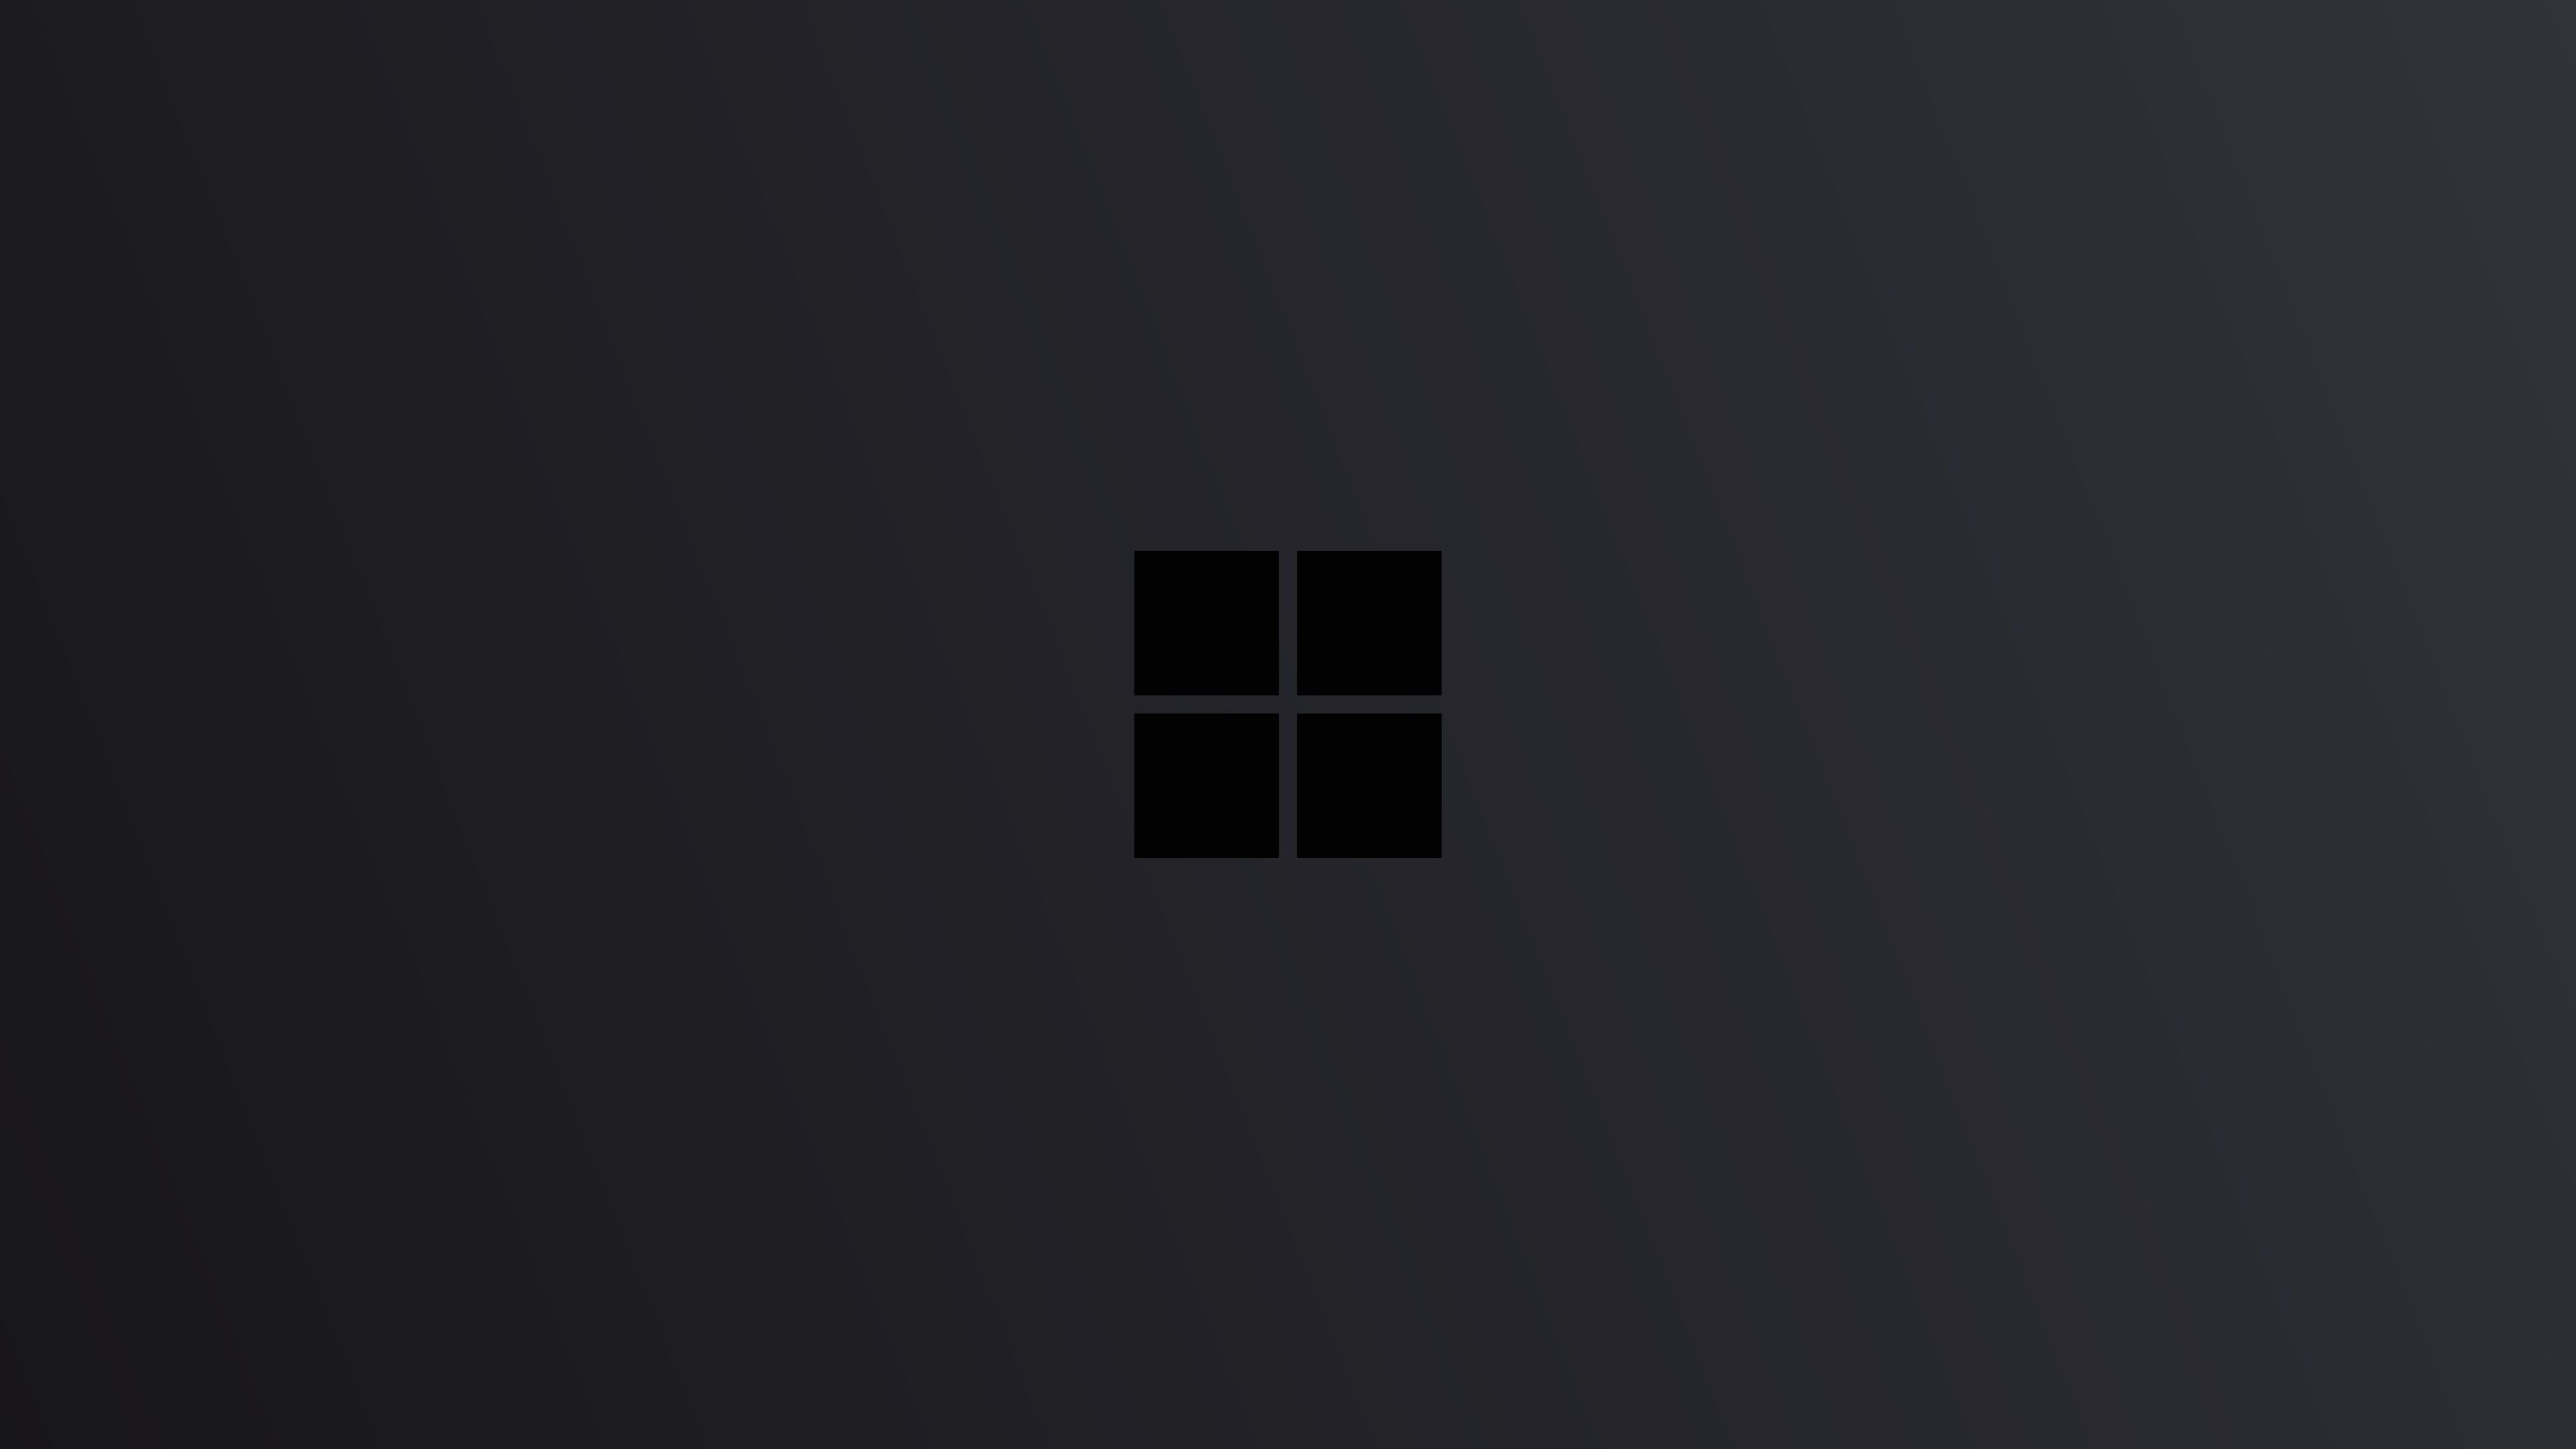 Windows 10 Logo Minimal Dark 2560x1600 Resolution Wallpaper, HD Minimalist 4K Wallpaper, Image, Photo and Background